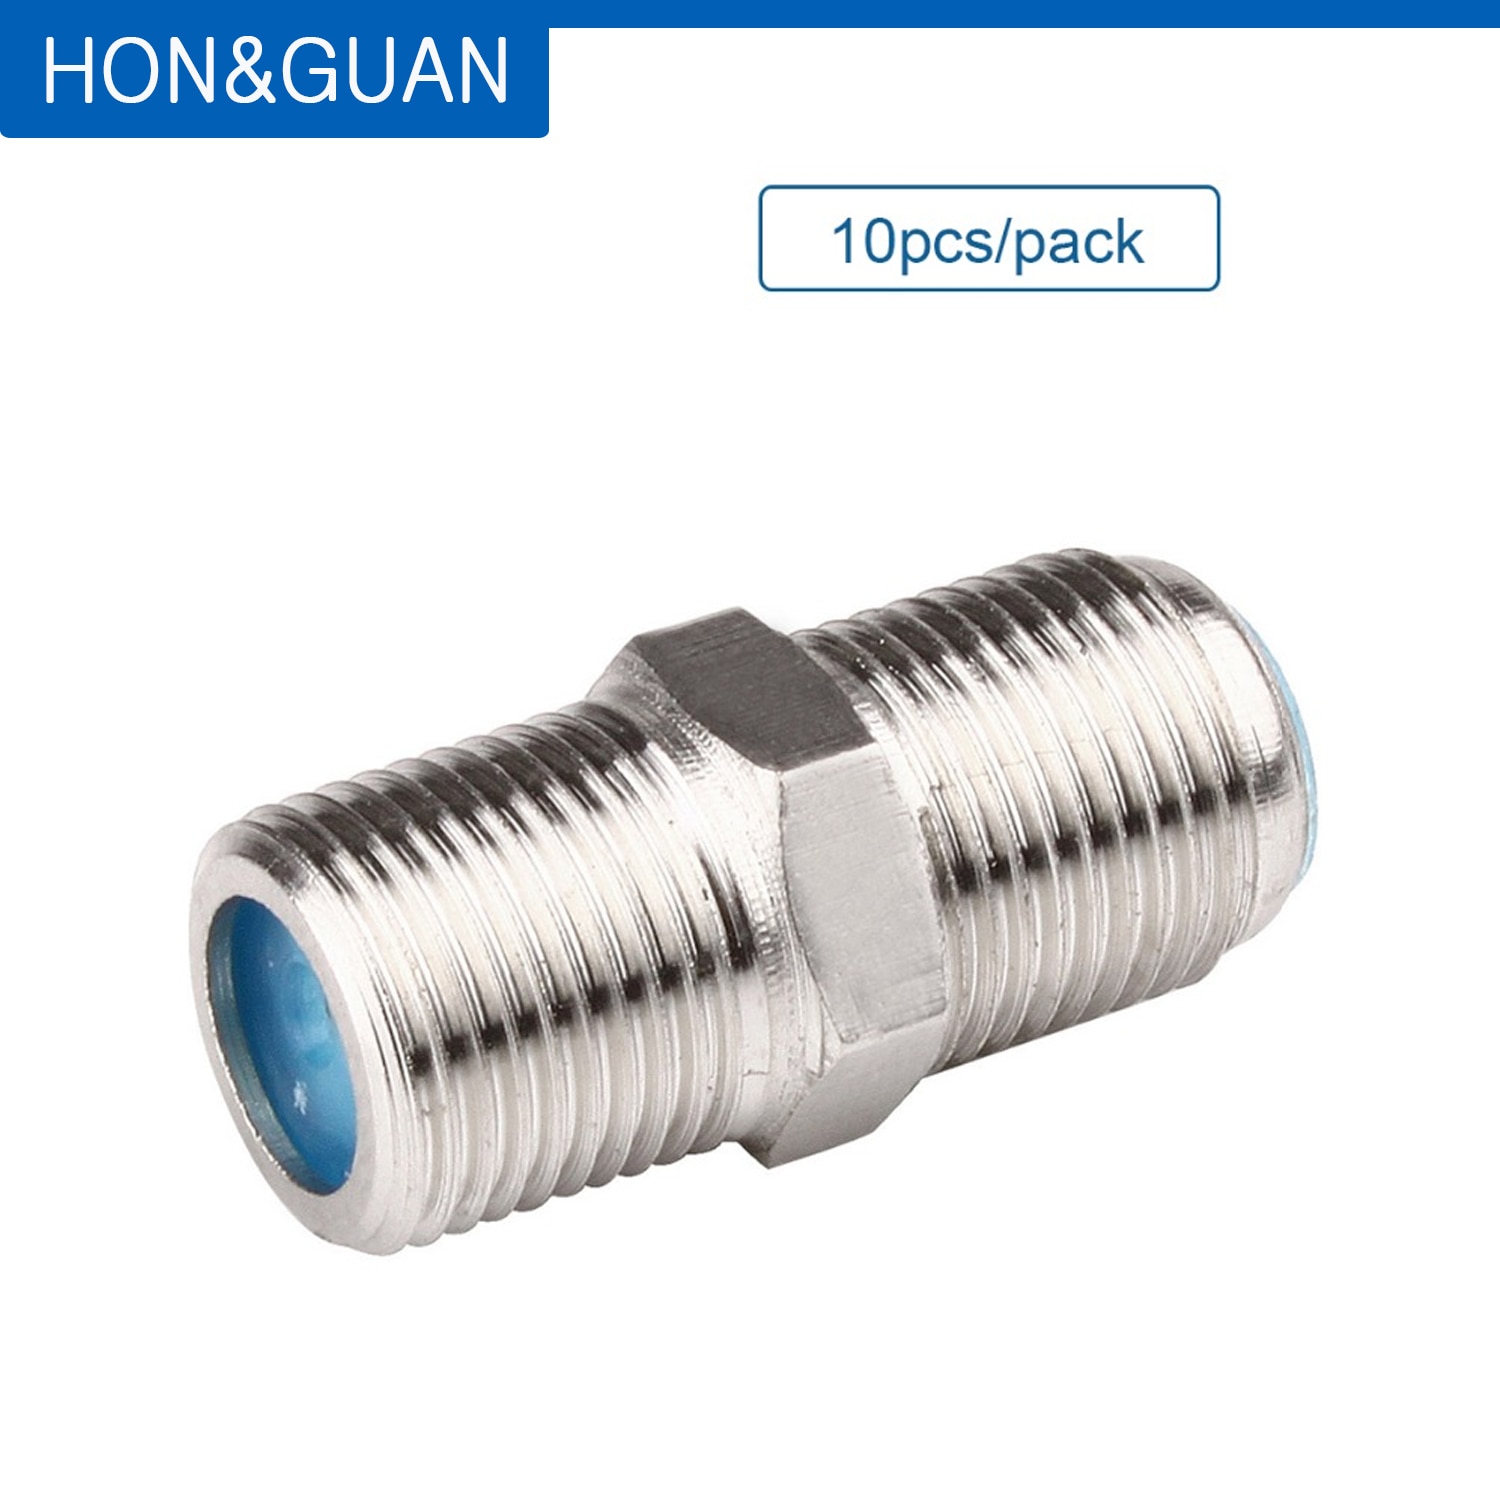 Hon & Guan 10 stks/pak F Type Koppeling Adapter Connector Female F/F RG6 Coax Coax Kabel;